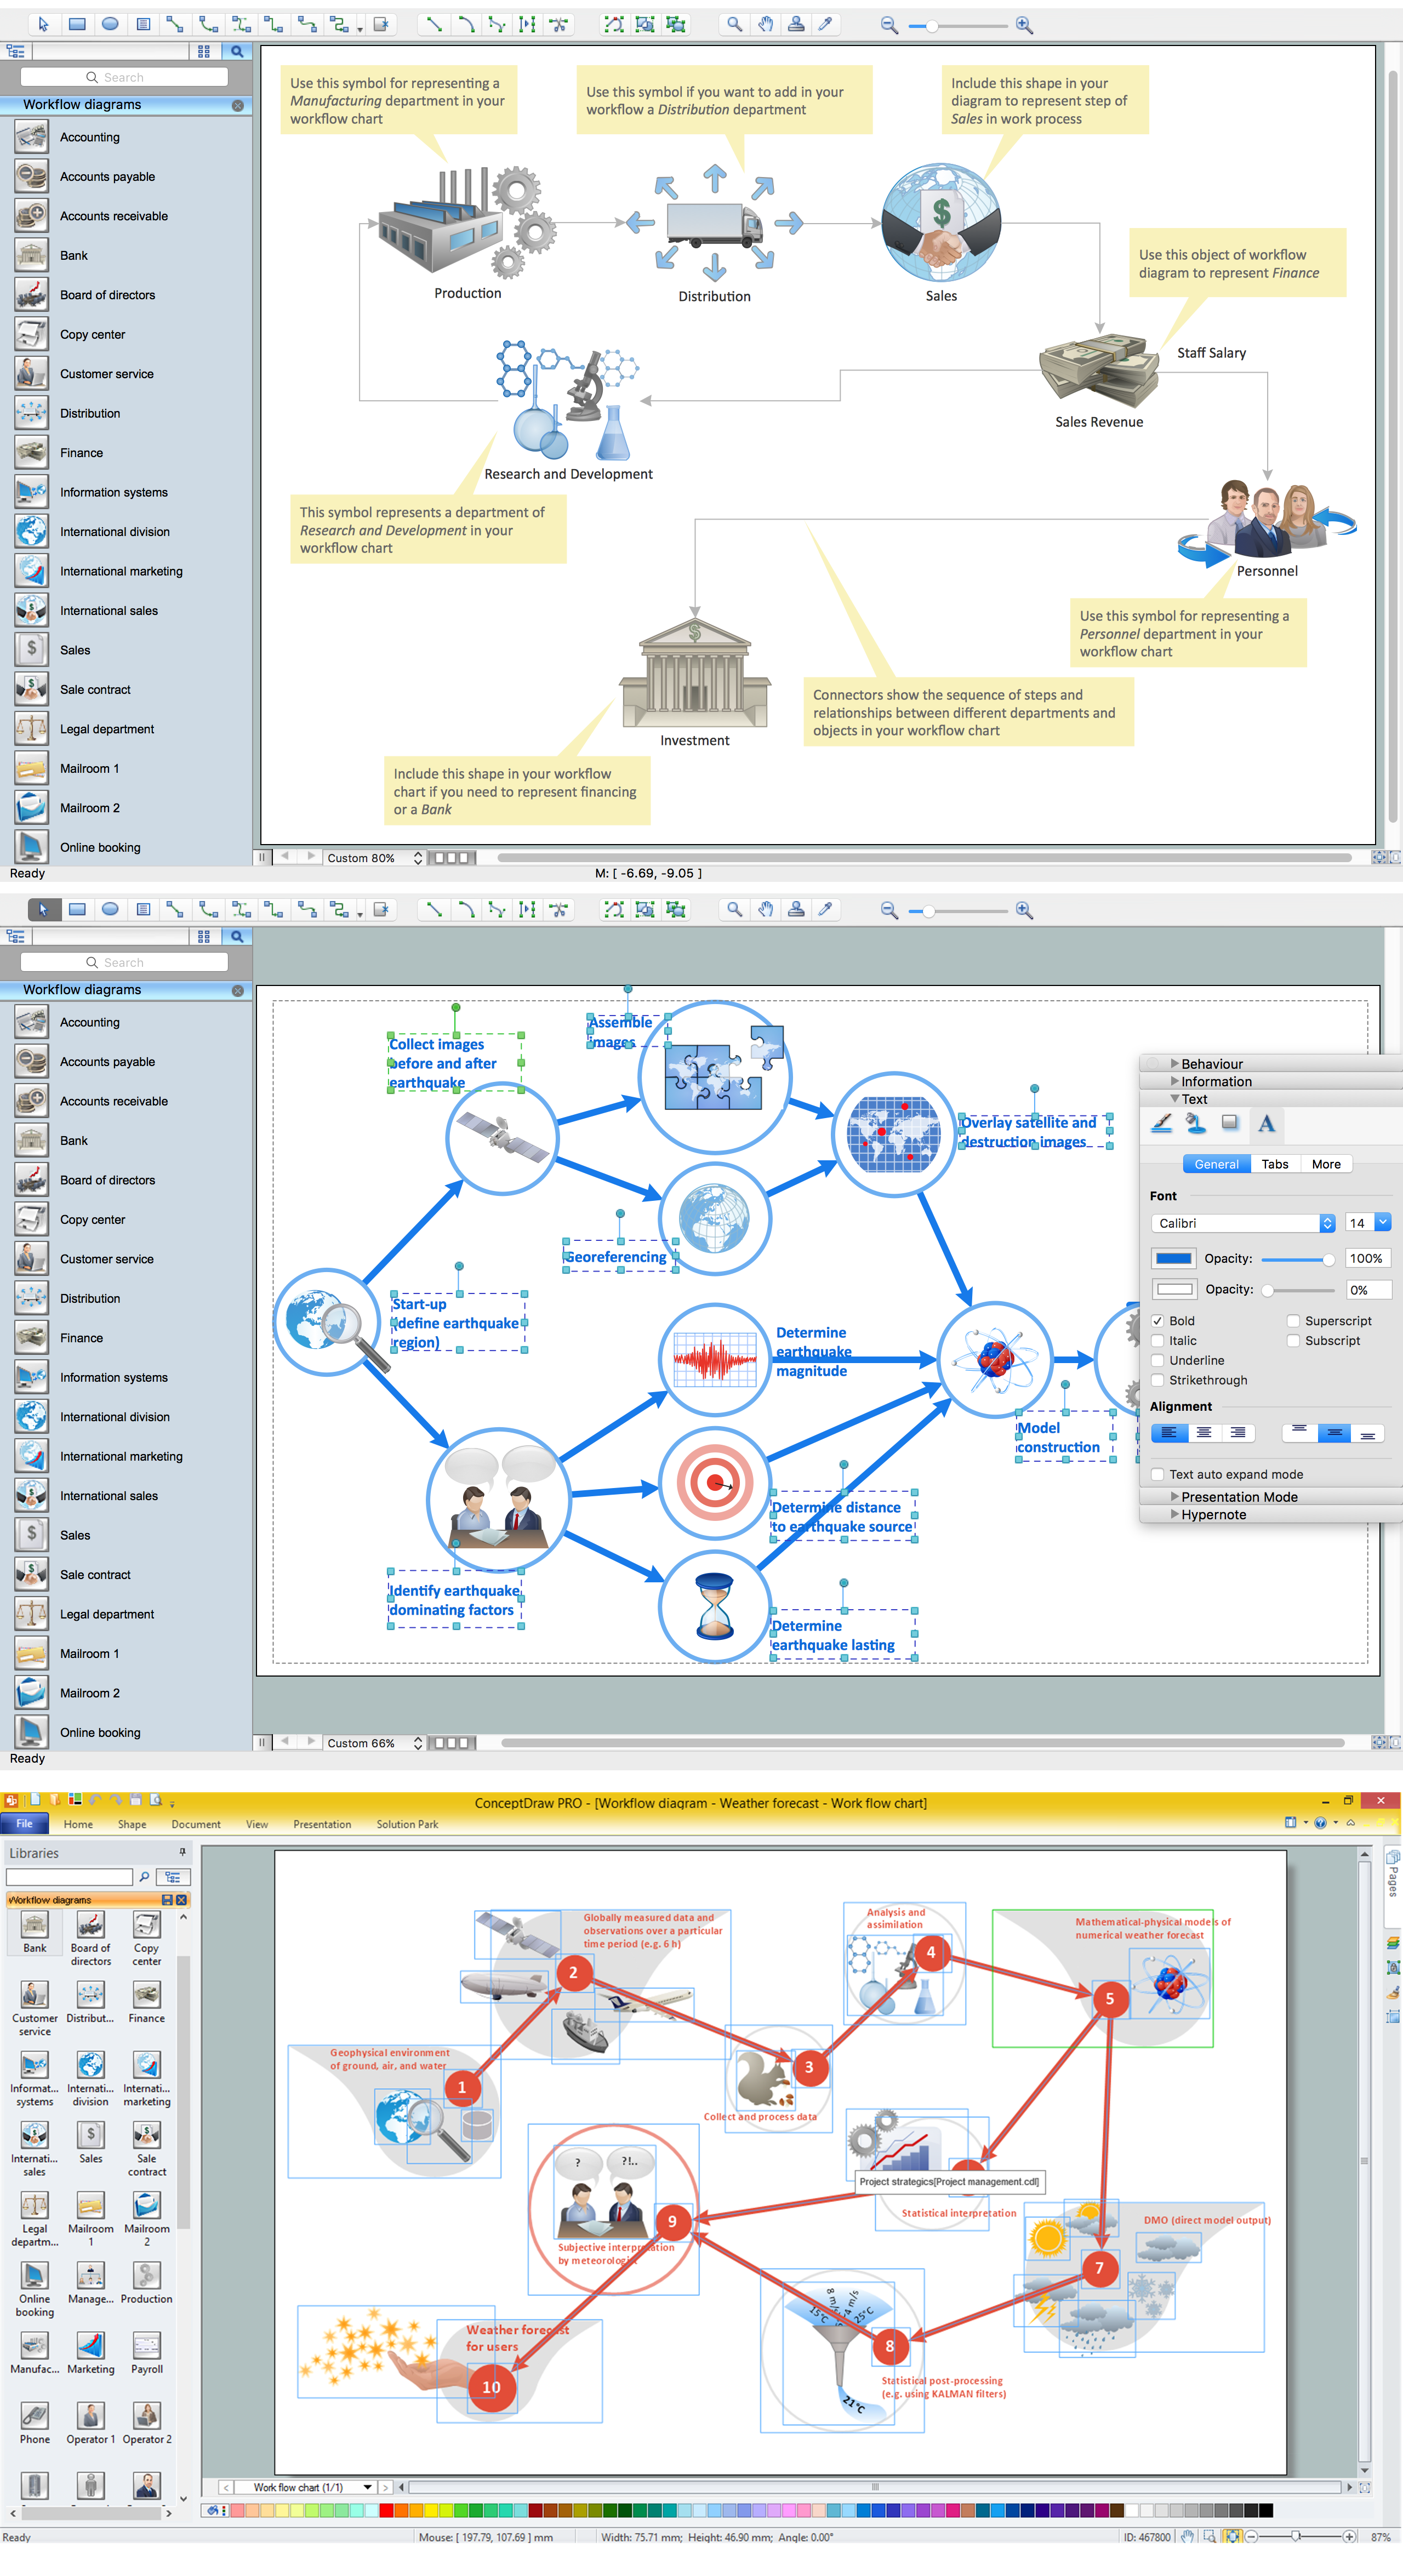 Software Diagrams - Workflow diagram, process flow diagram